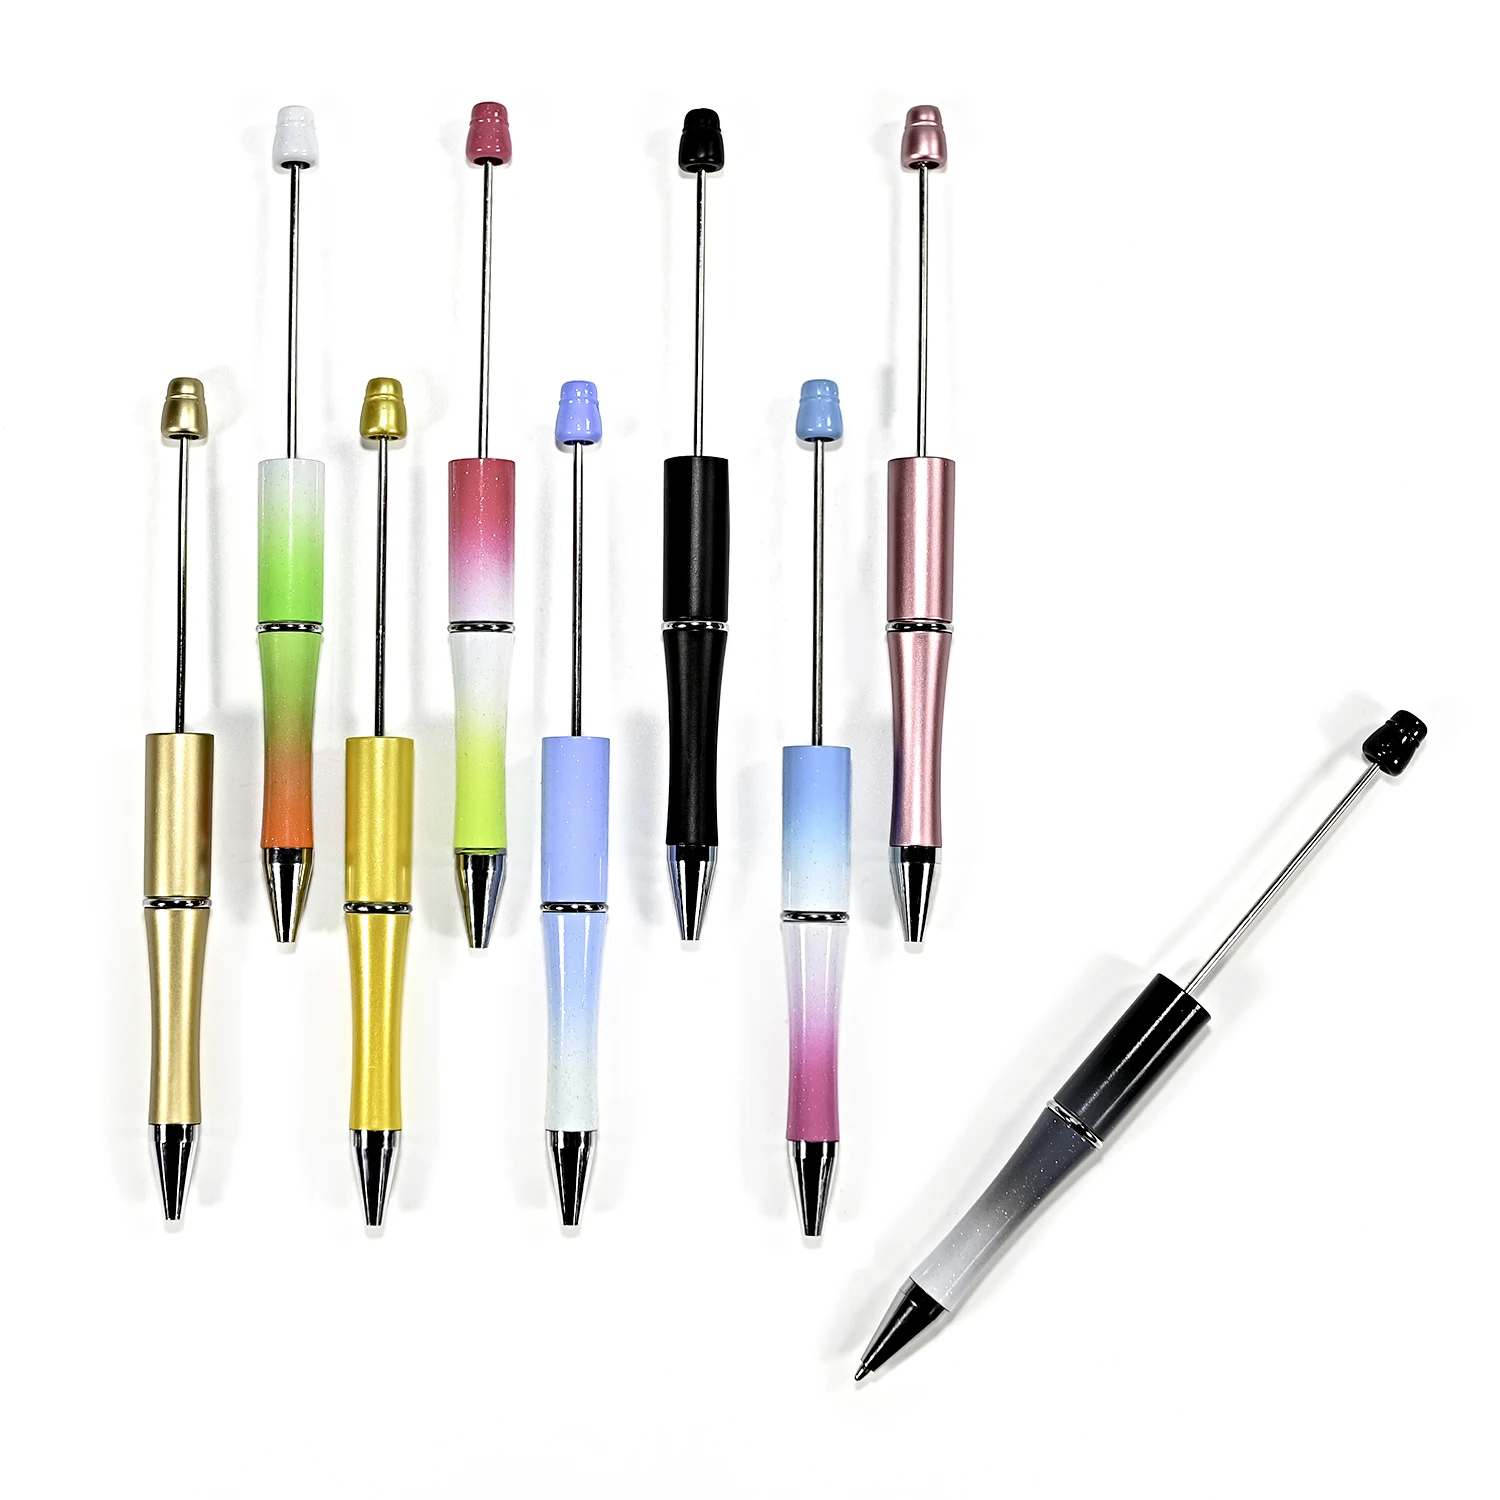 Exquisite hot selling personalized ballpoint pen DIY pen gift promotion plastic ballpoint pen